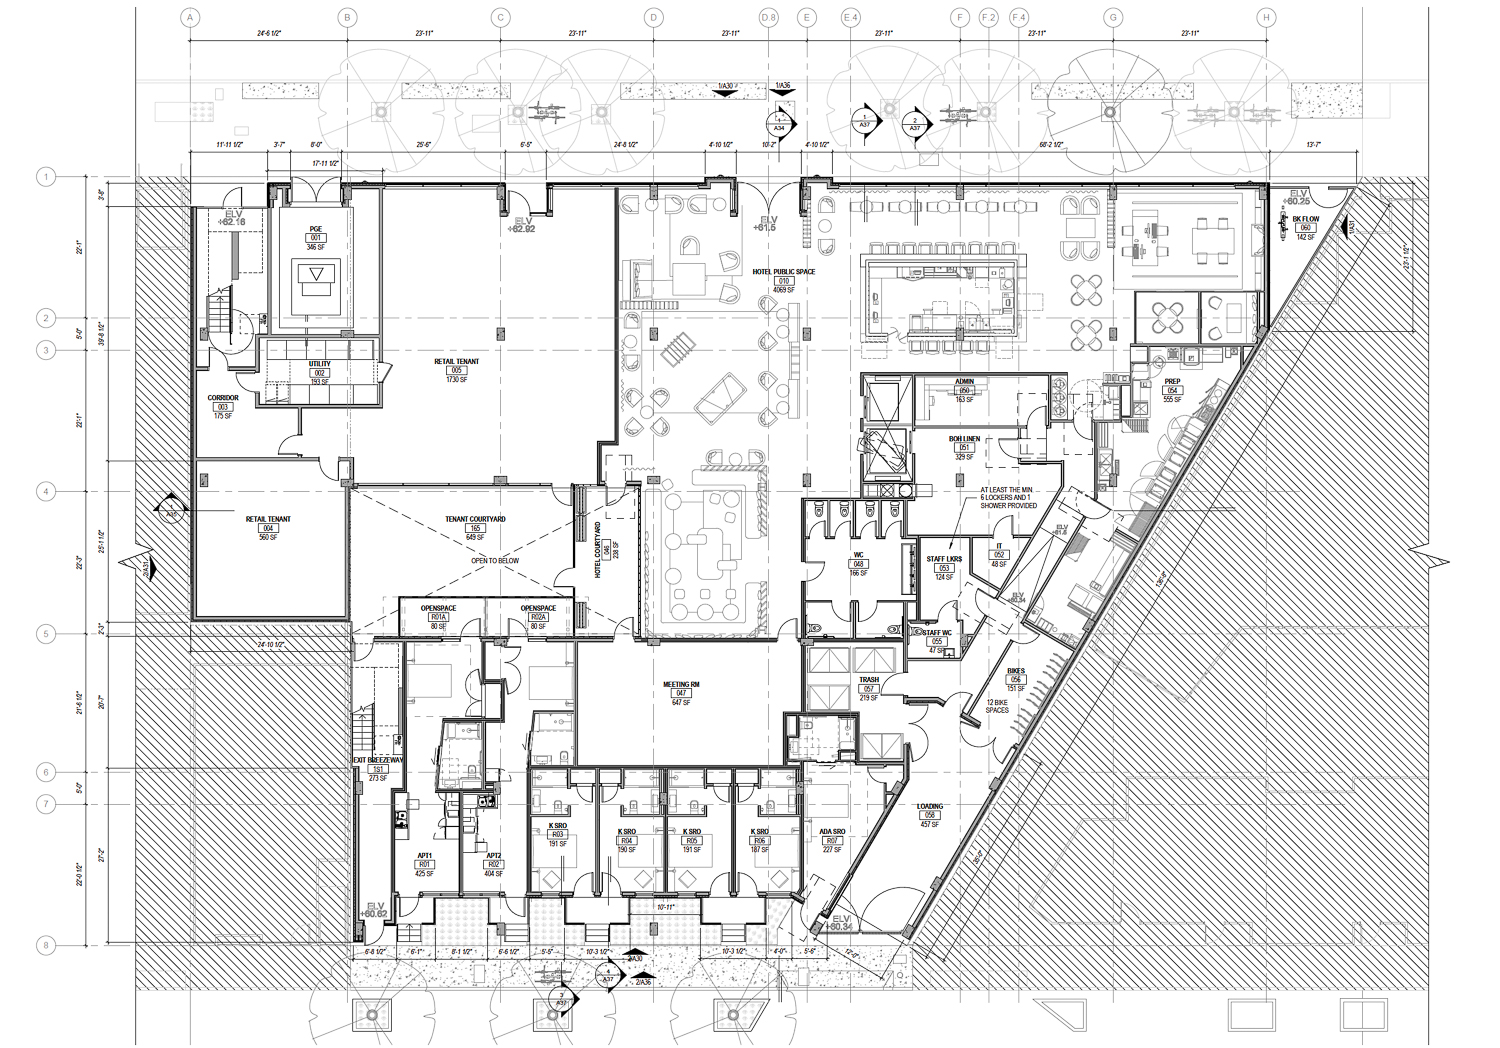 465 Grove Street ground-level floor plan, rendering by Stanton Architecture